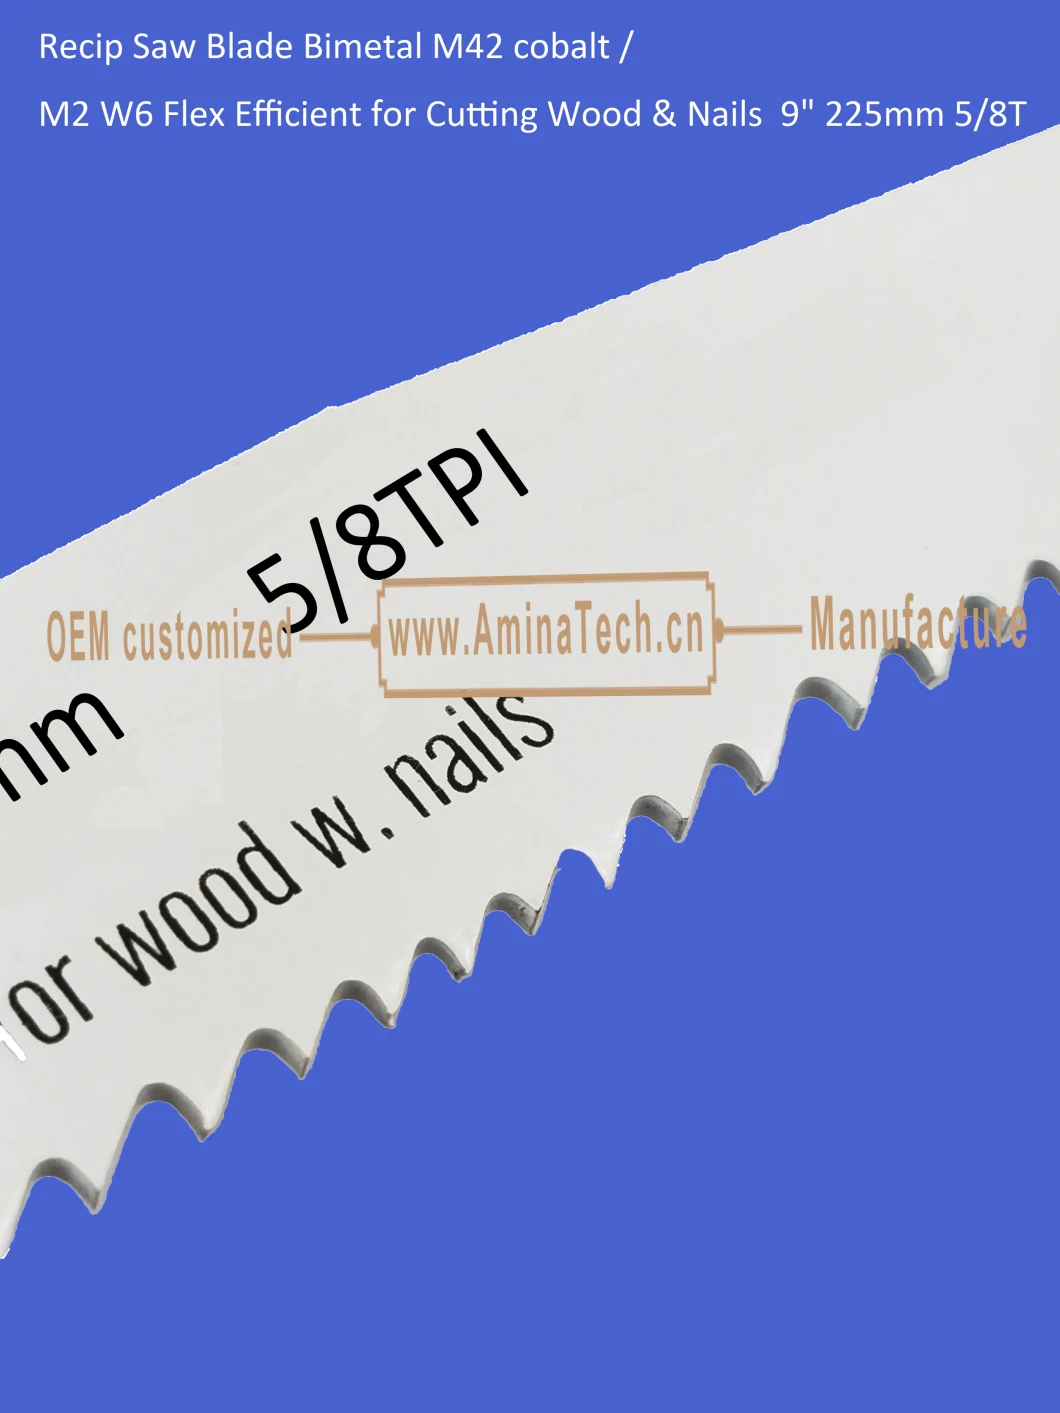 Reciprocating,Recip Saw Blade Bimetal M42 cobalt /M2 W6 Flex Efficient for Cutting Wood & Nails 9